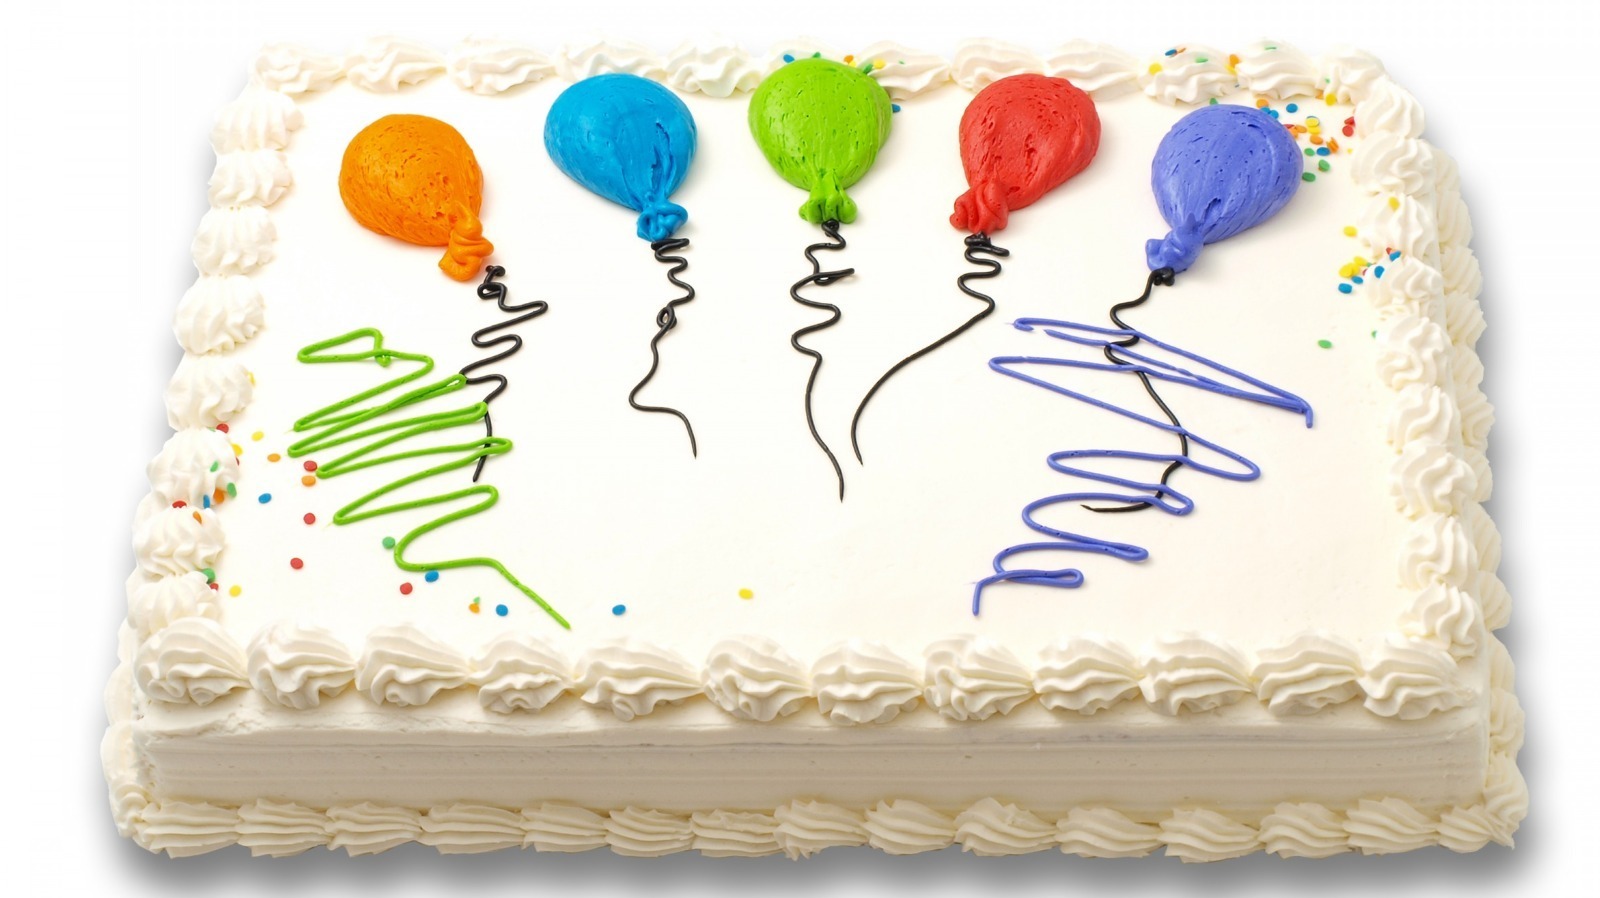 Best Tasting Supermarket Birthday Cakes Picture | Publix bakery, Supermarket  birthday cakes, Publix cakes